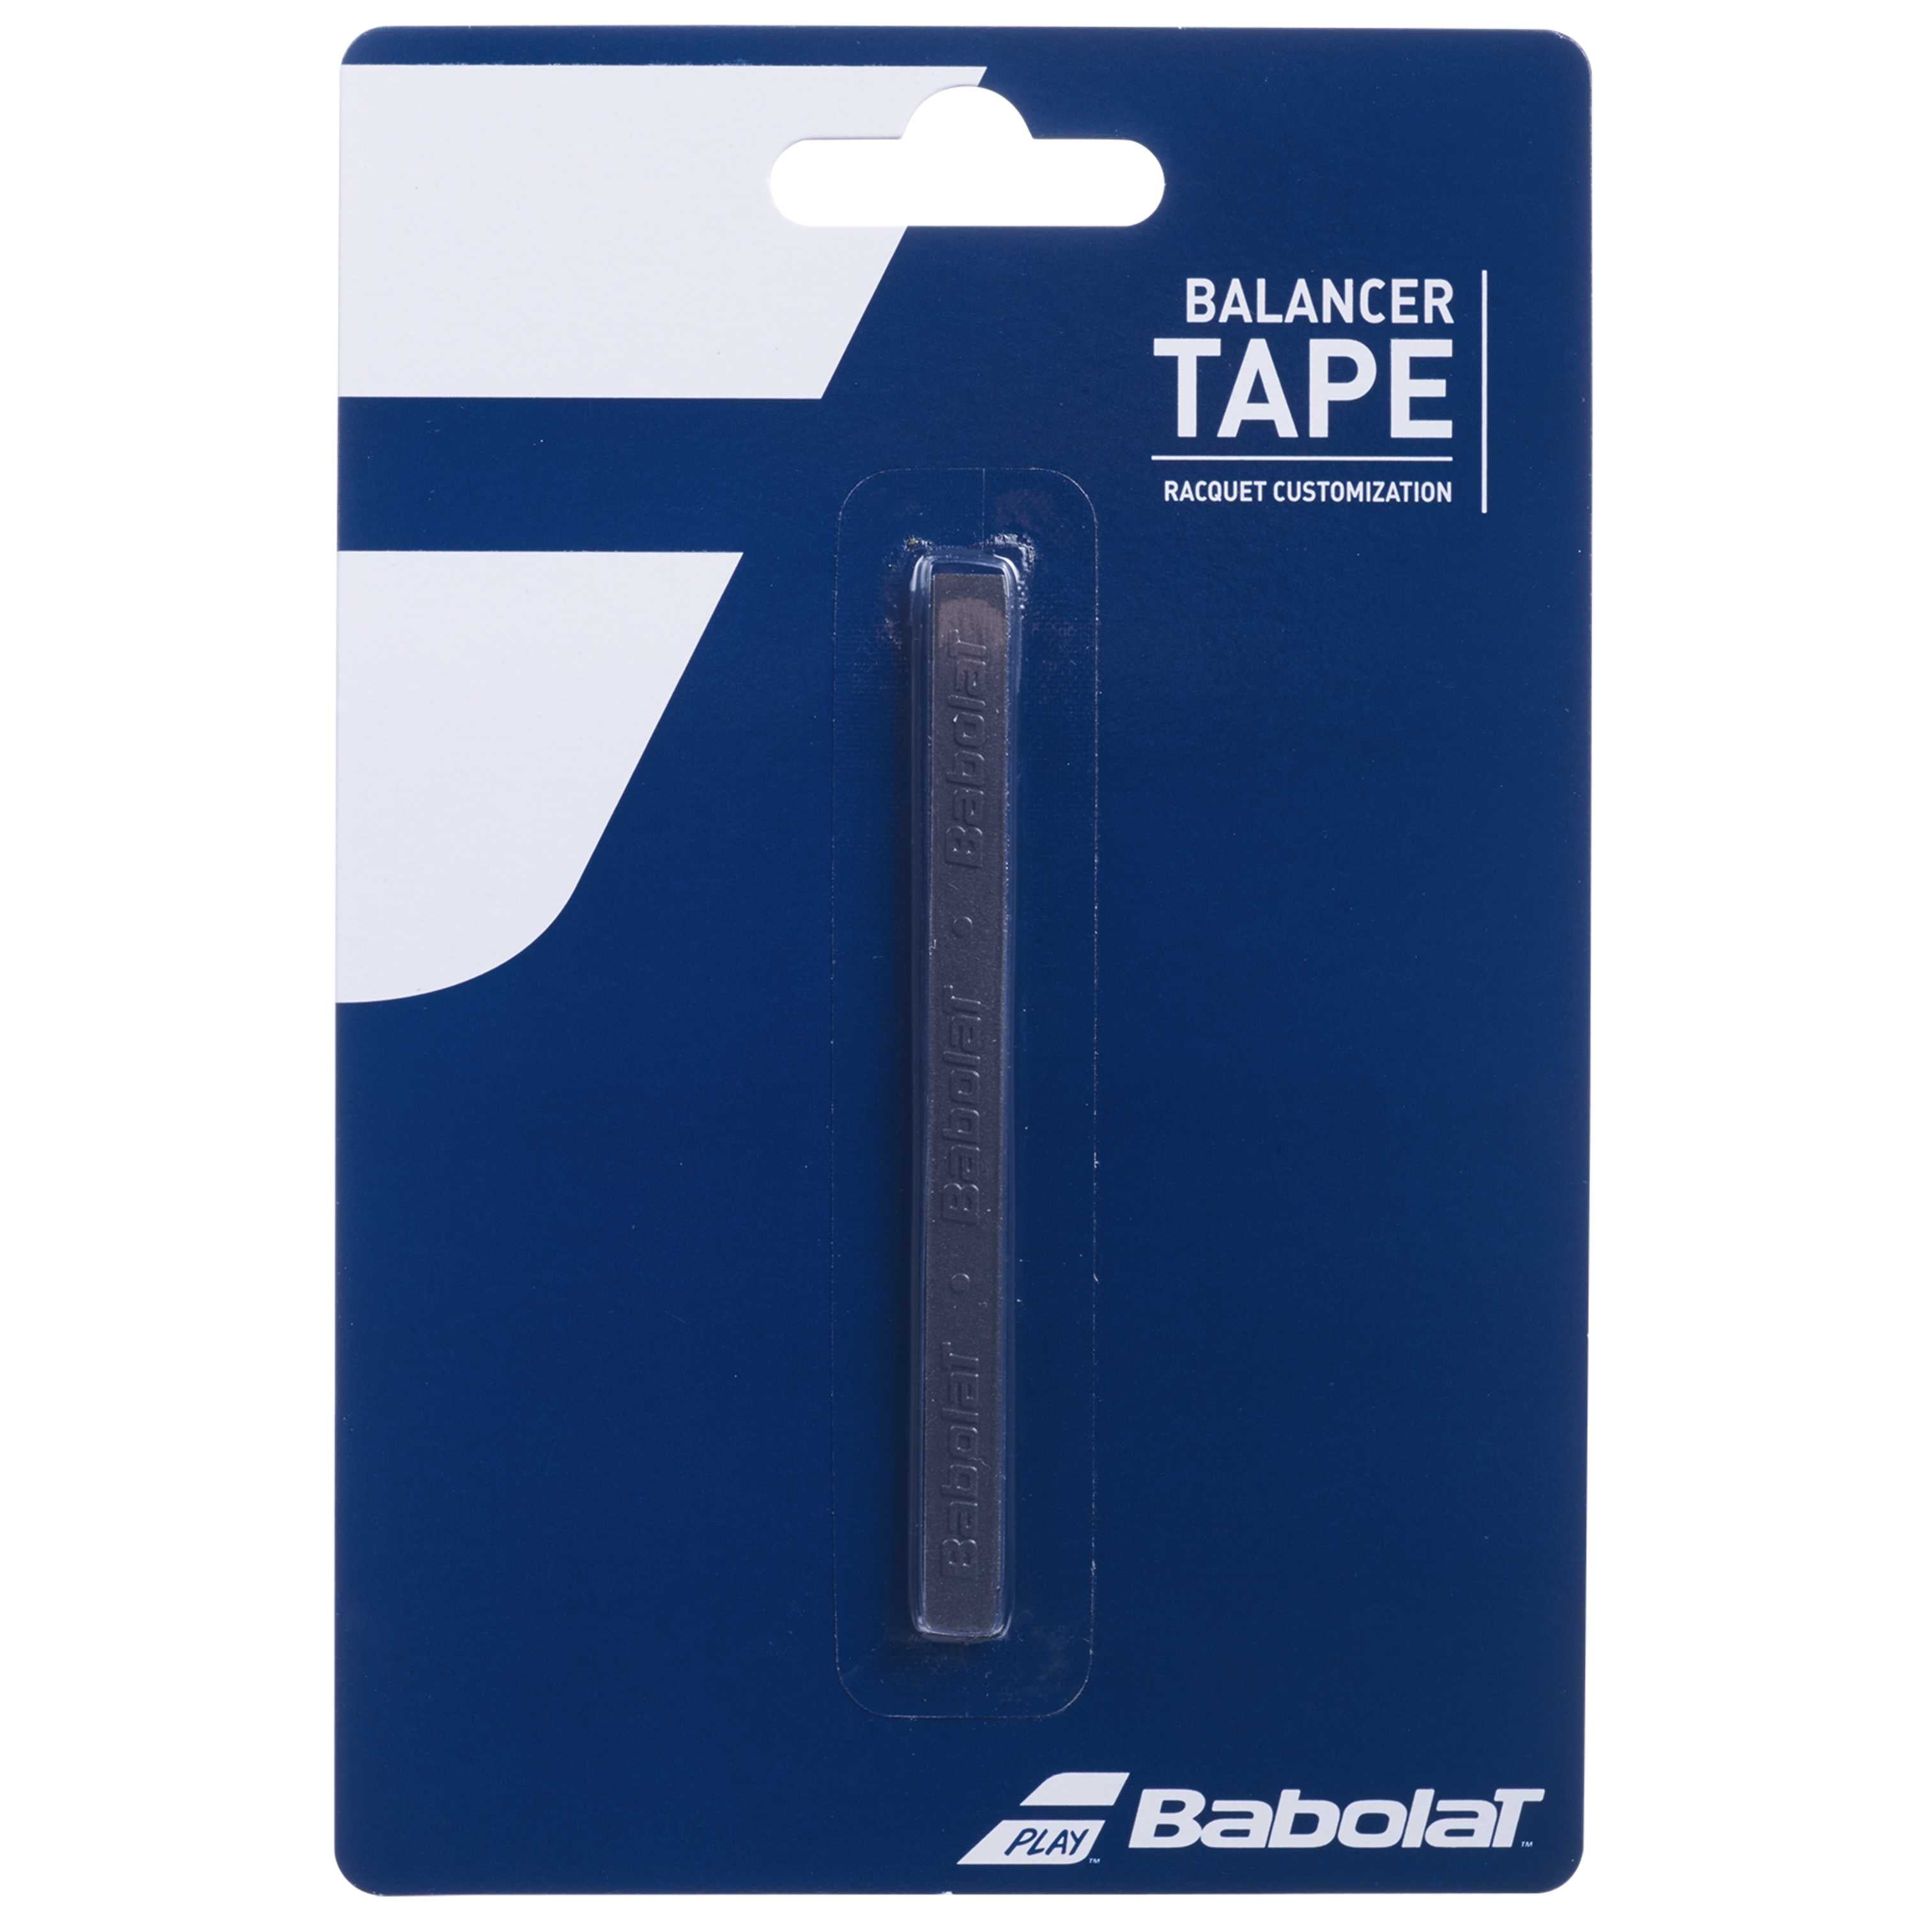 Babolat Balancer Tape Racquet Point